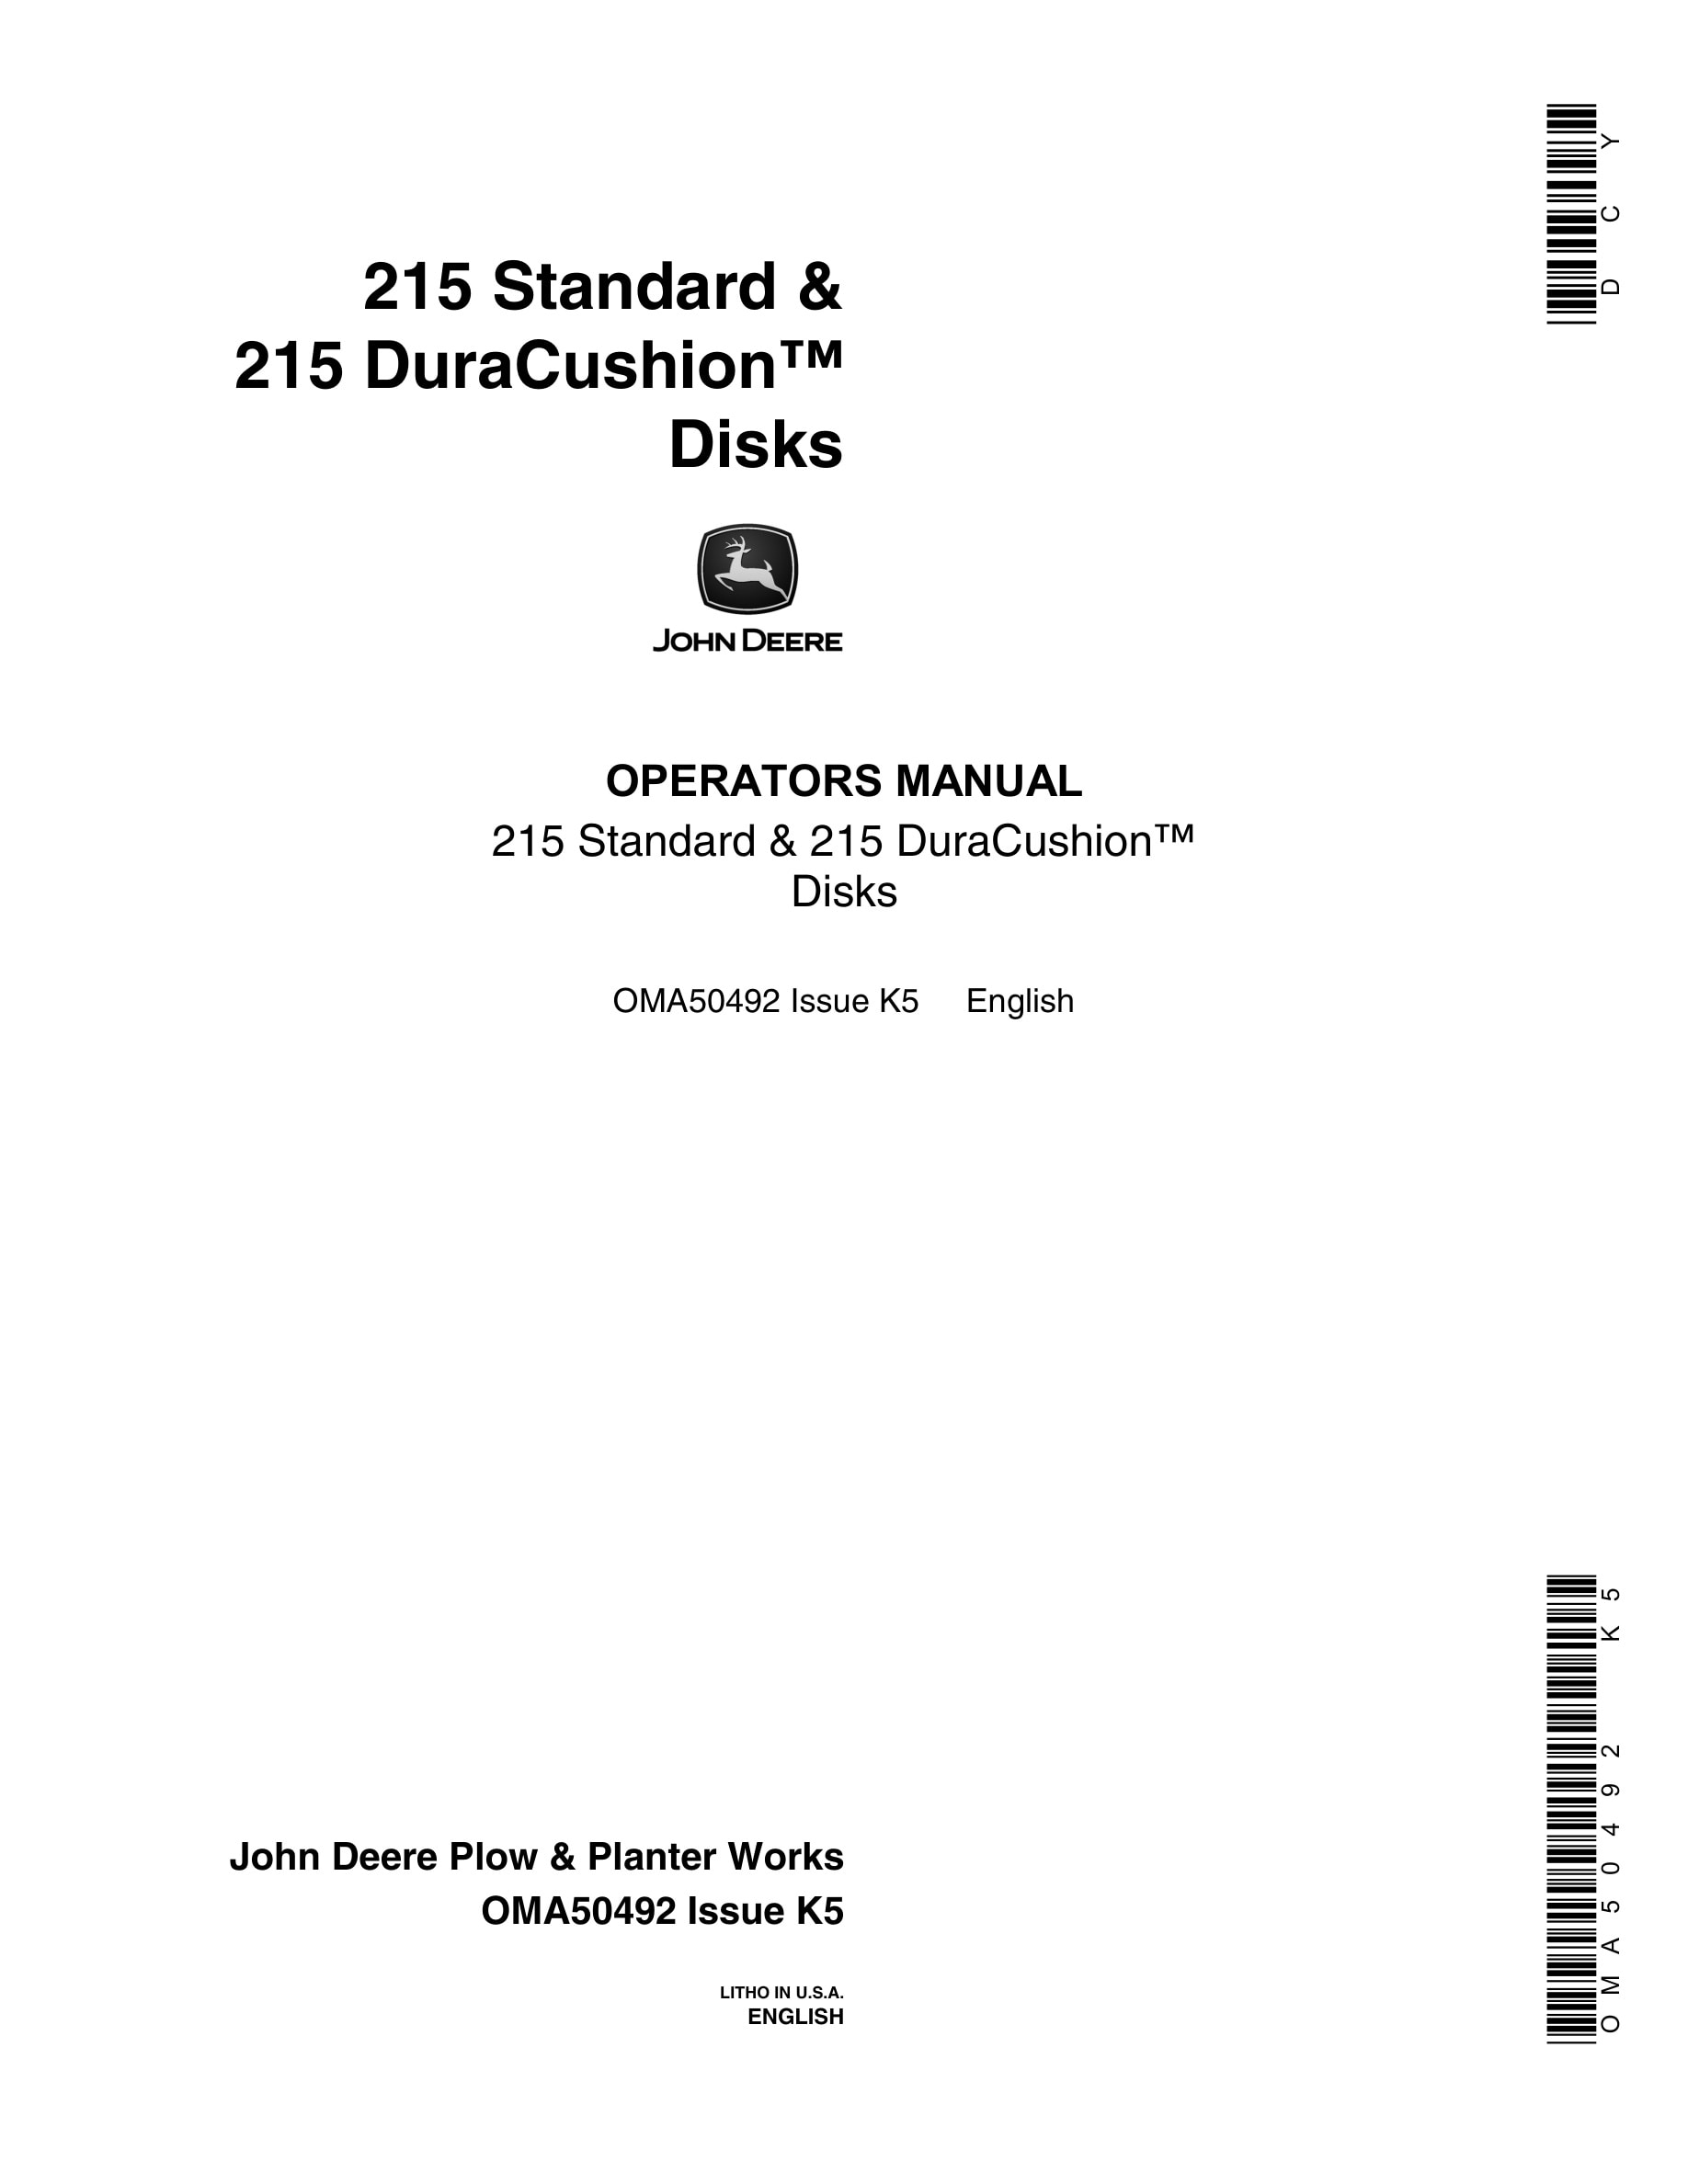 John Deere 215 Standard & 215 DuraCushion Disks Operator Manual OMA50492-1